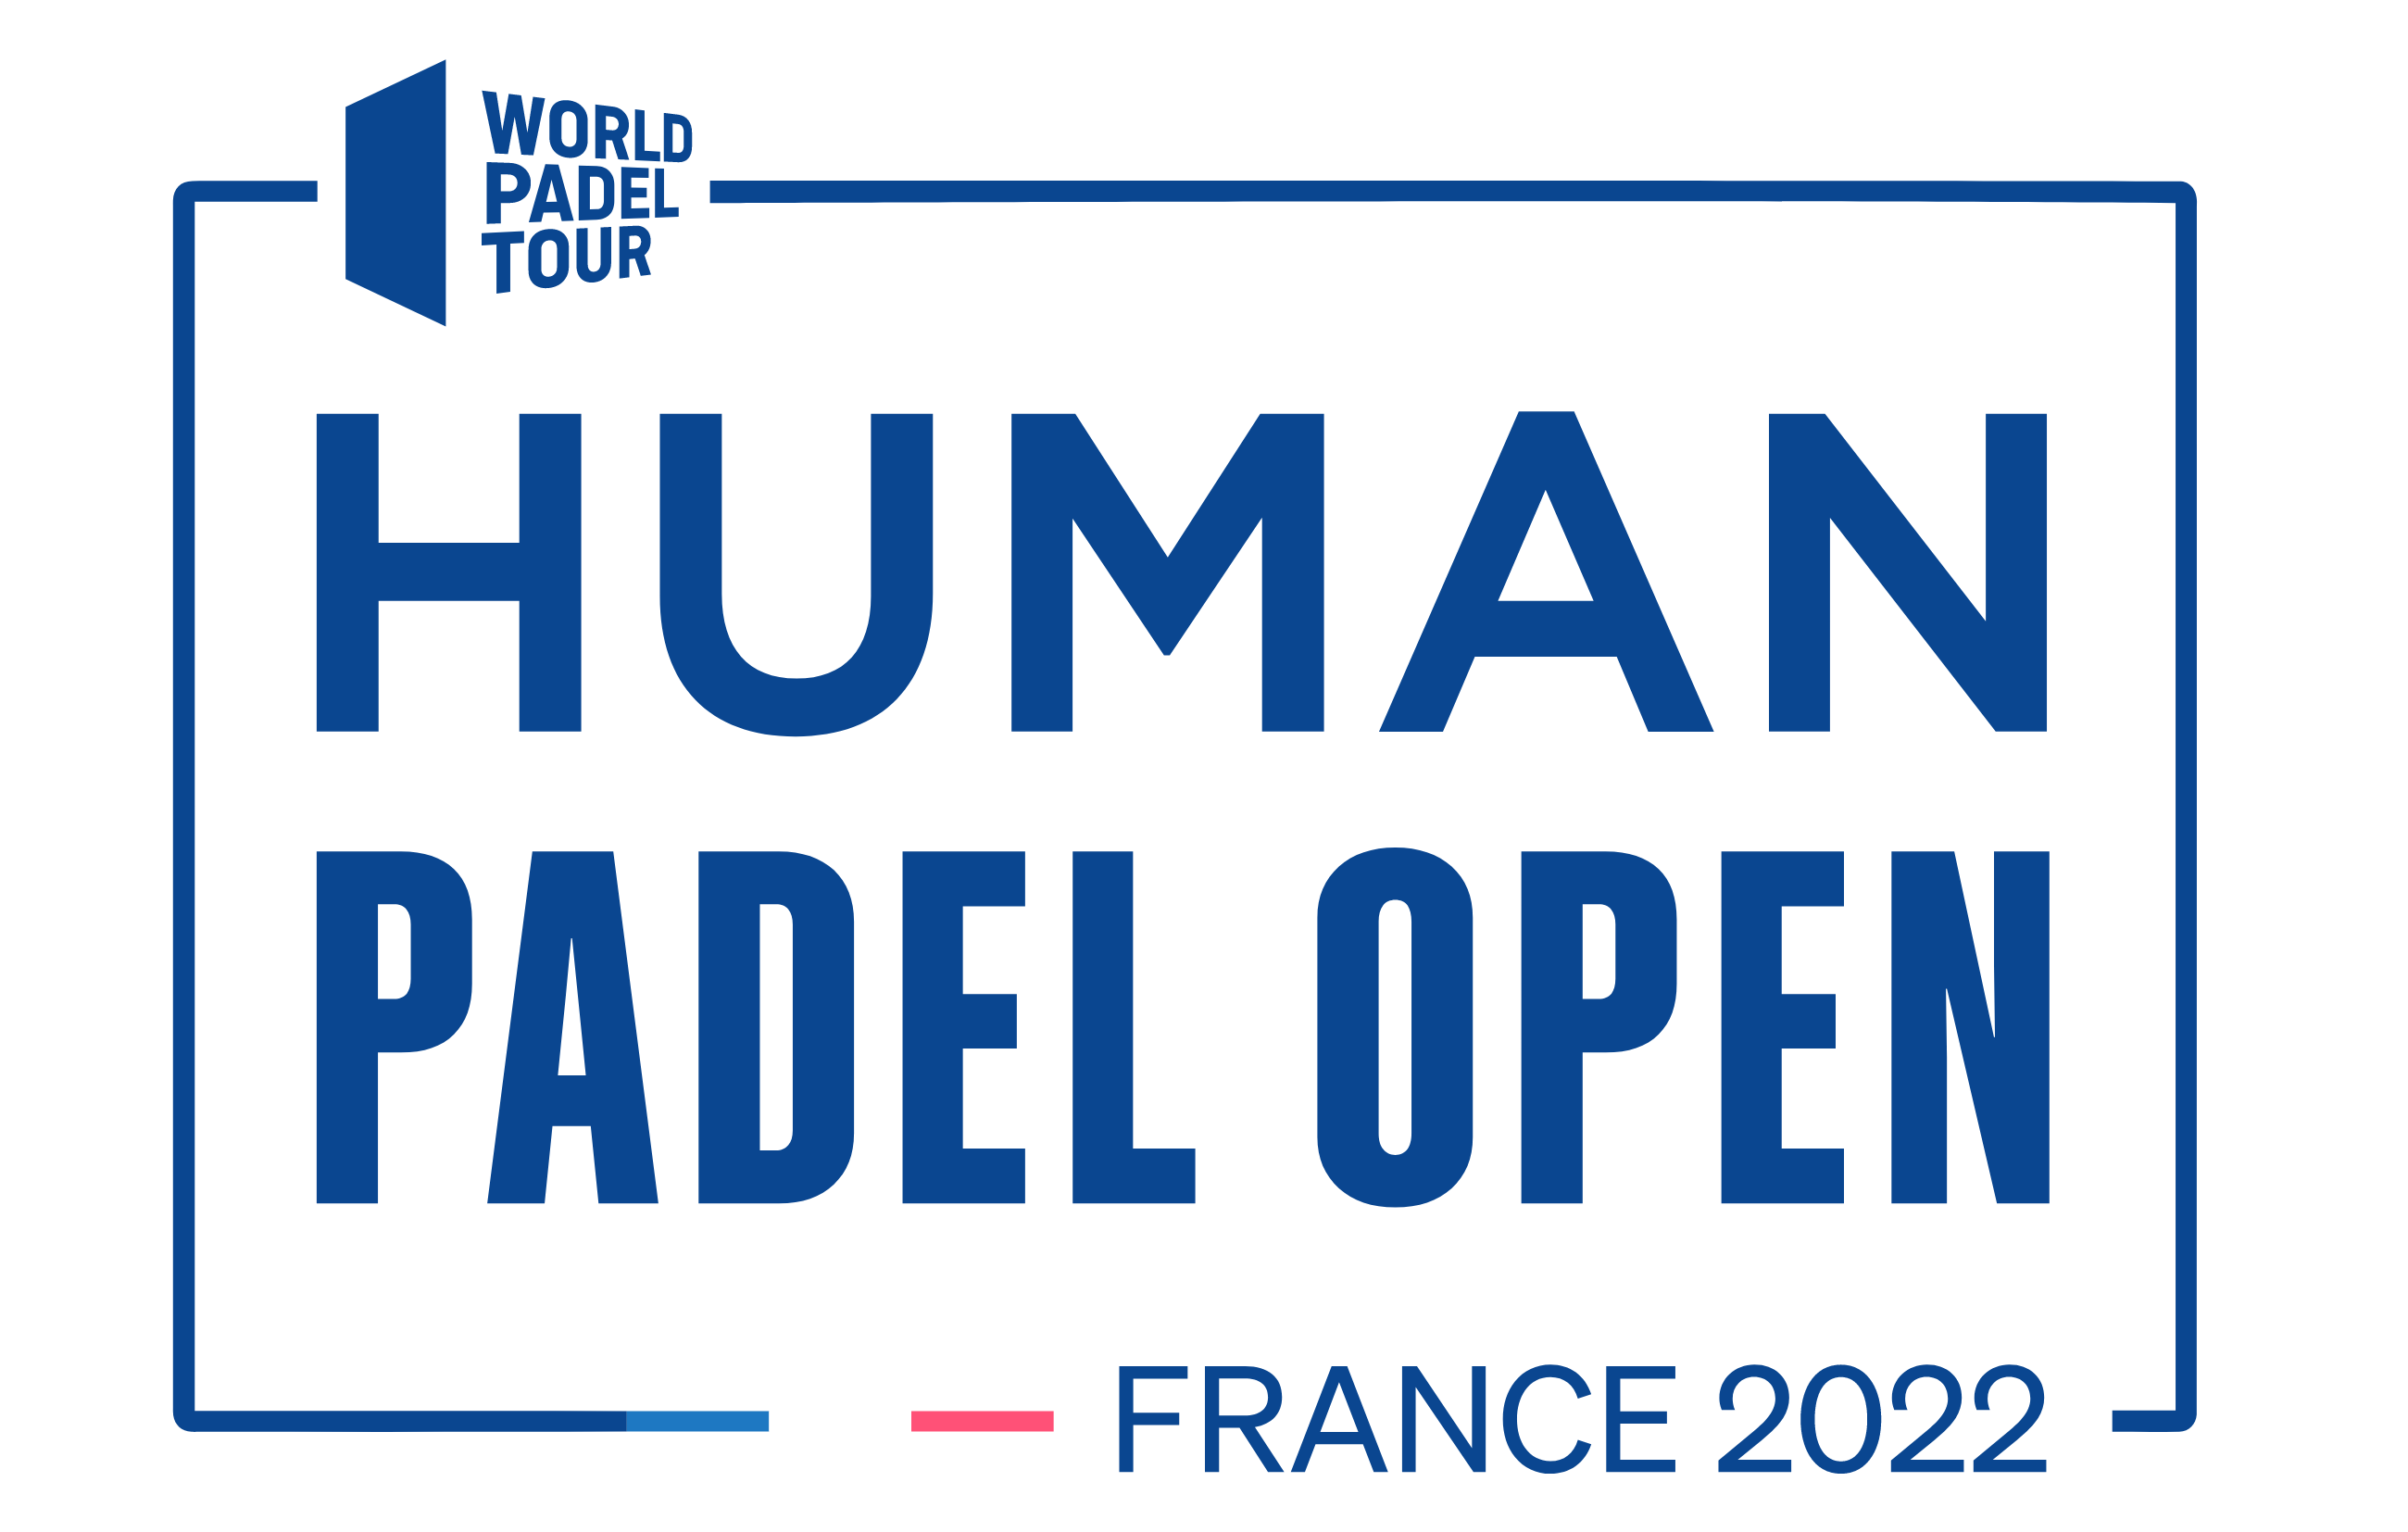 HUMANA PADEL OBERT world padel tour logo